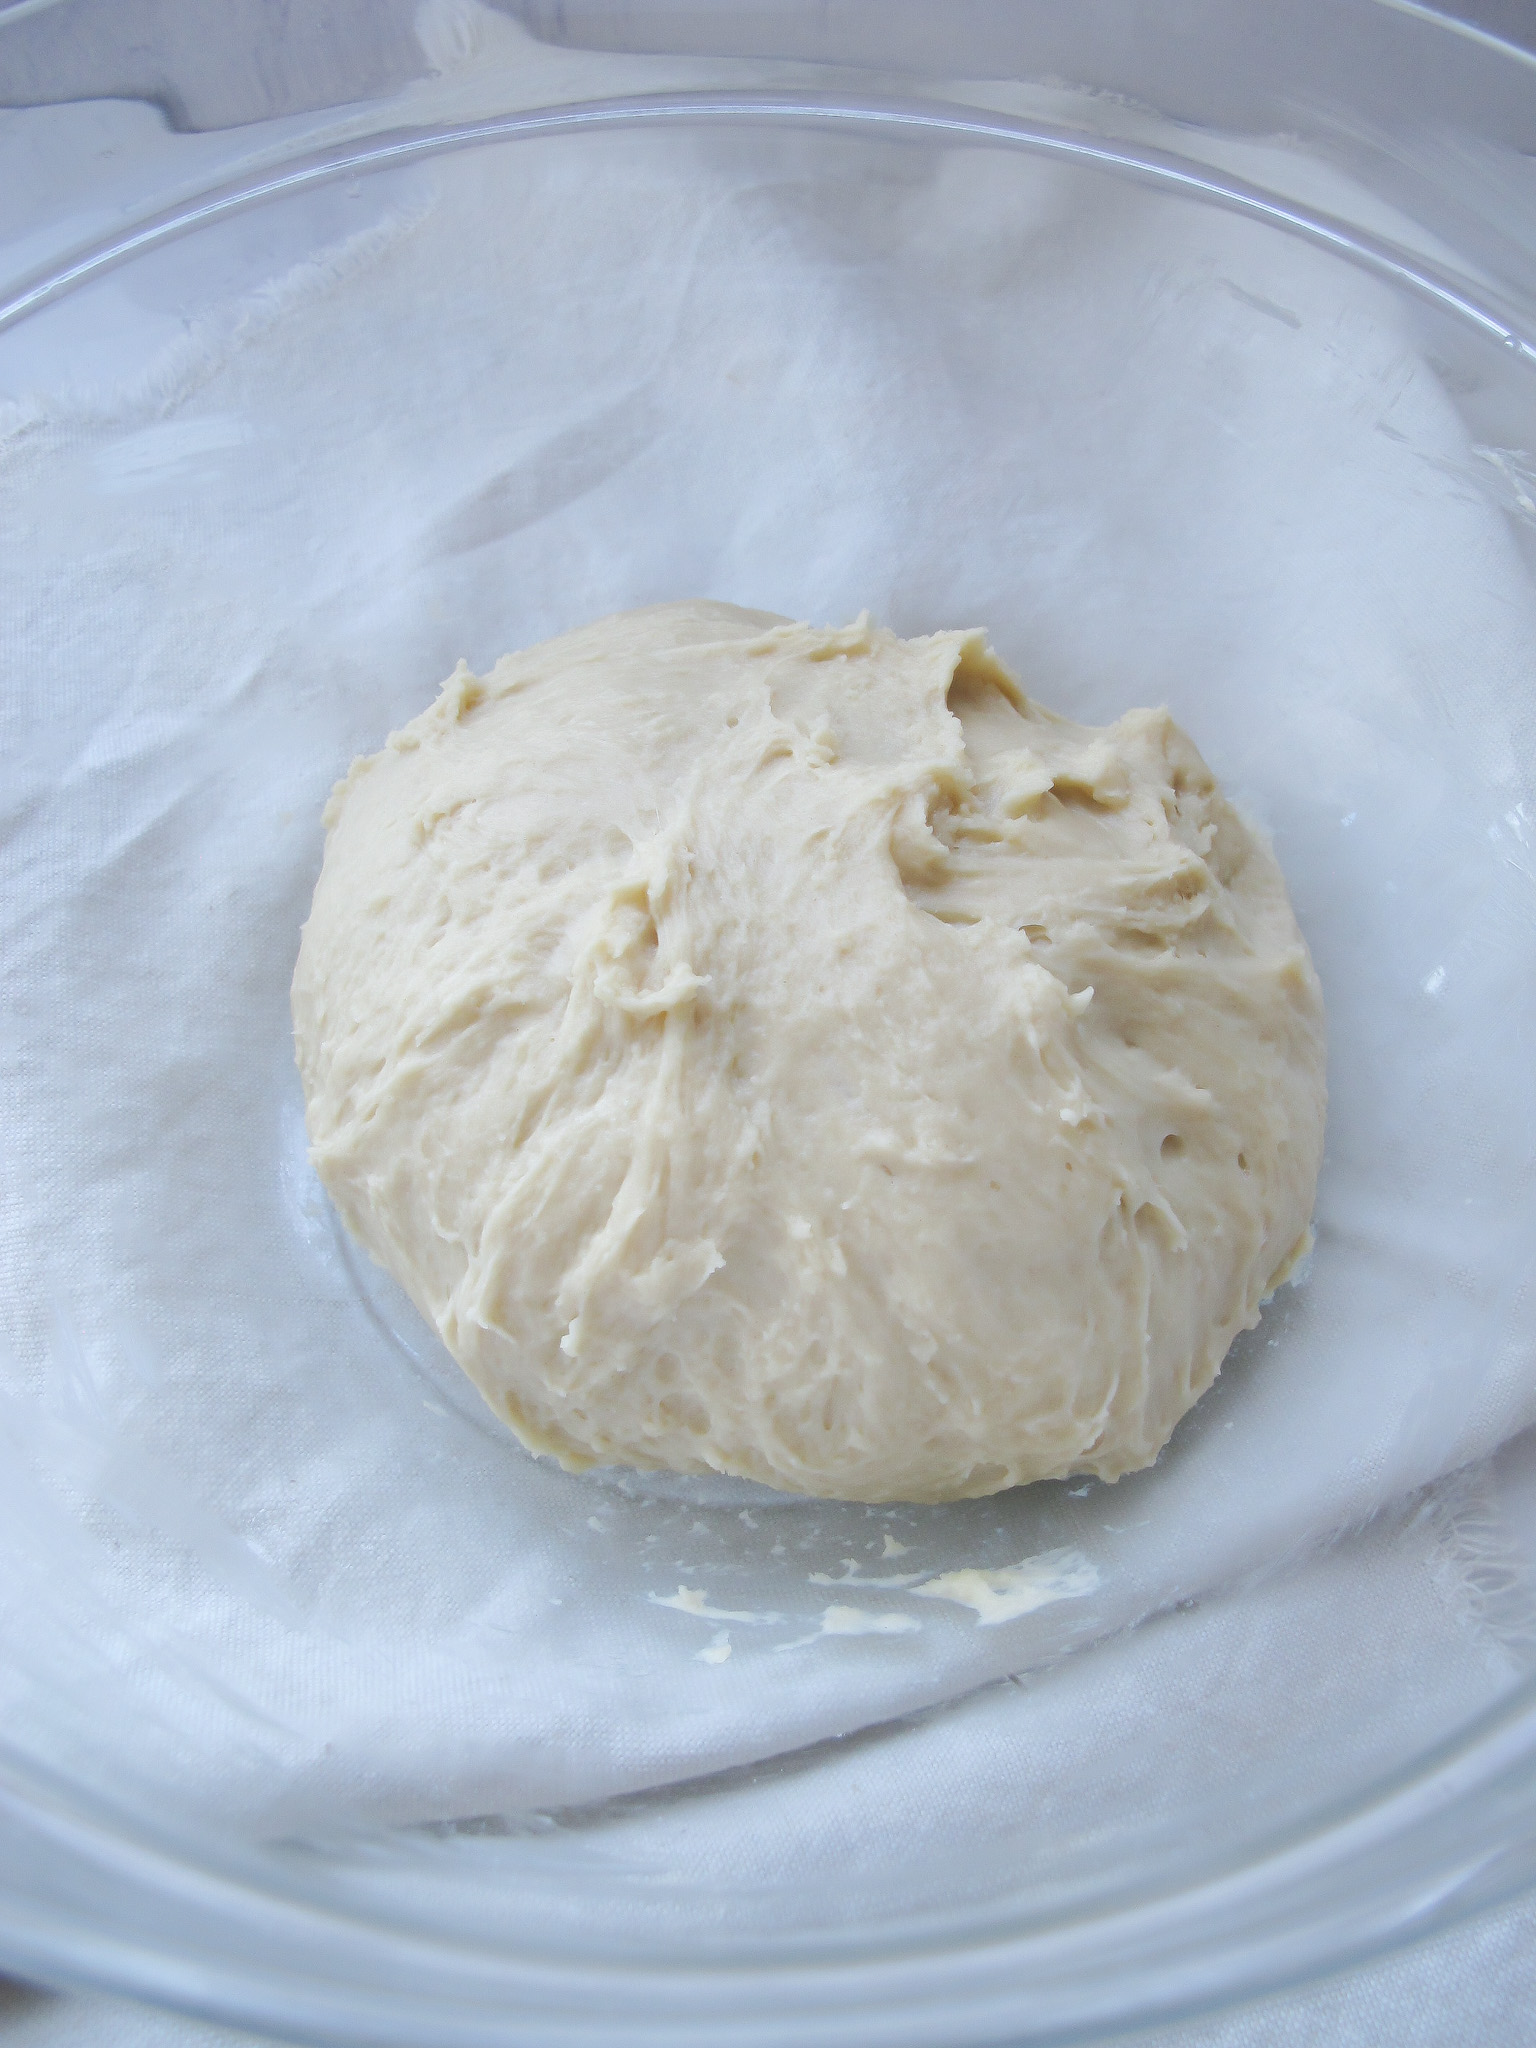 A ball of cinnamon roll dough